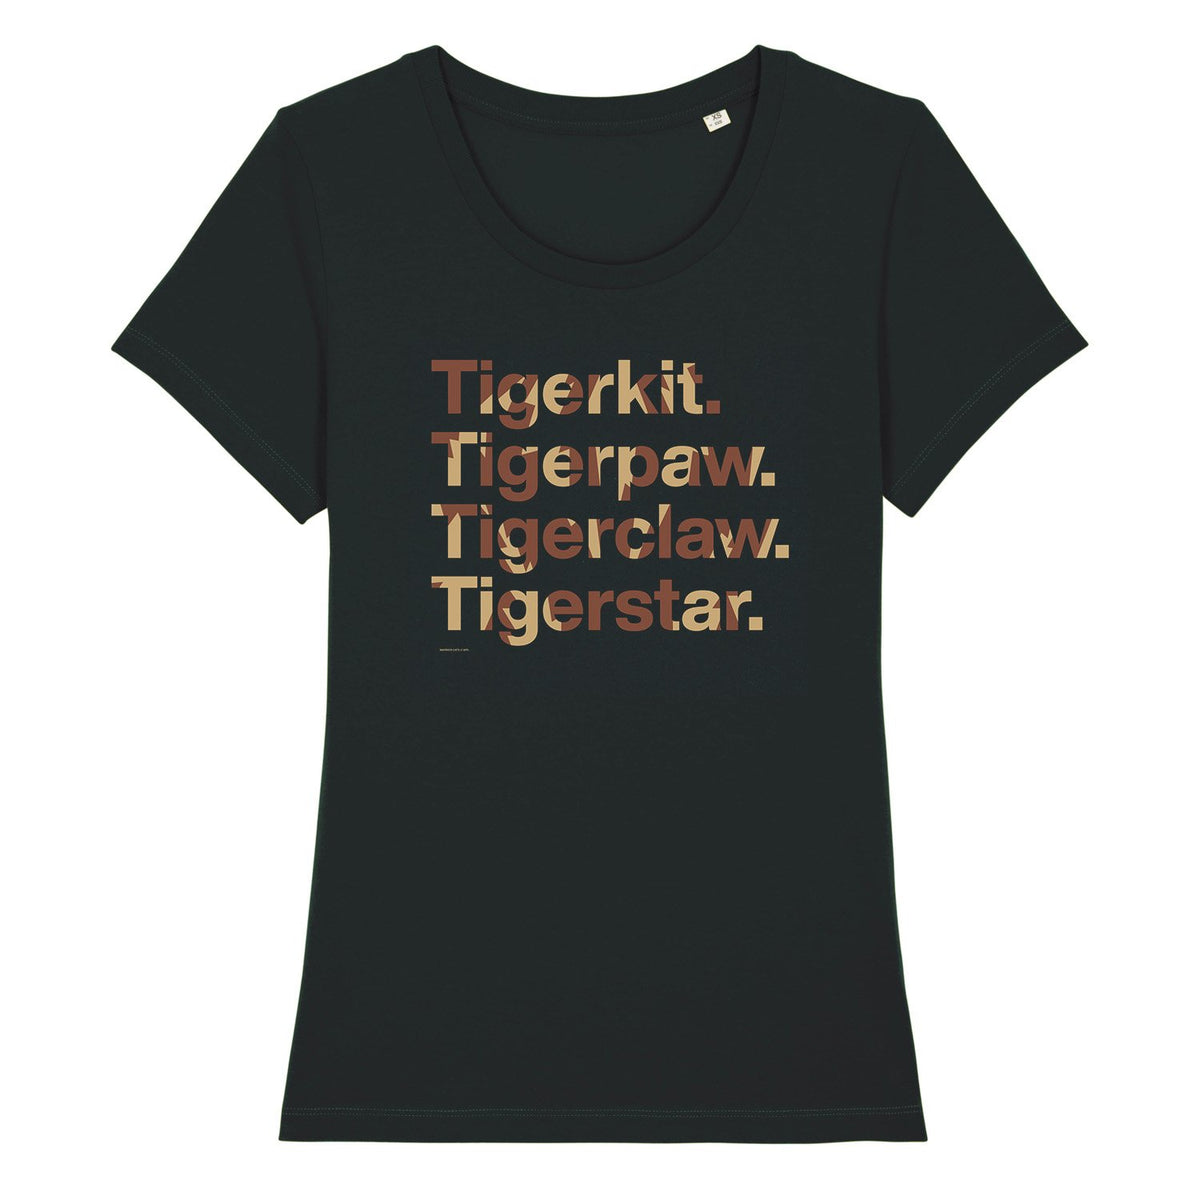 Character Names - Tigerstar - Adult Ladies T-Shirt